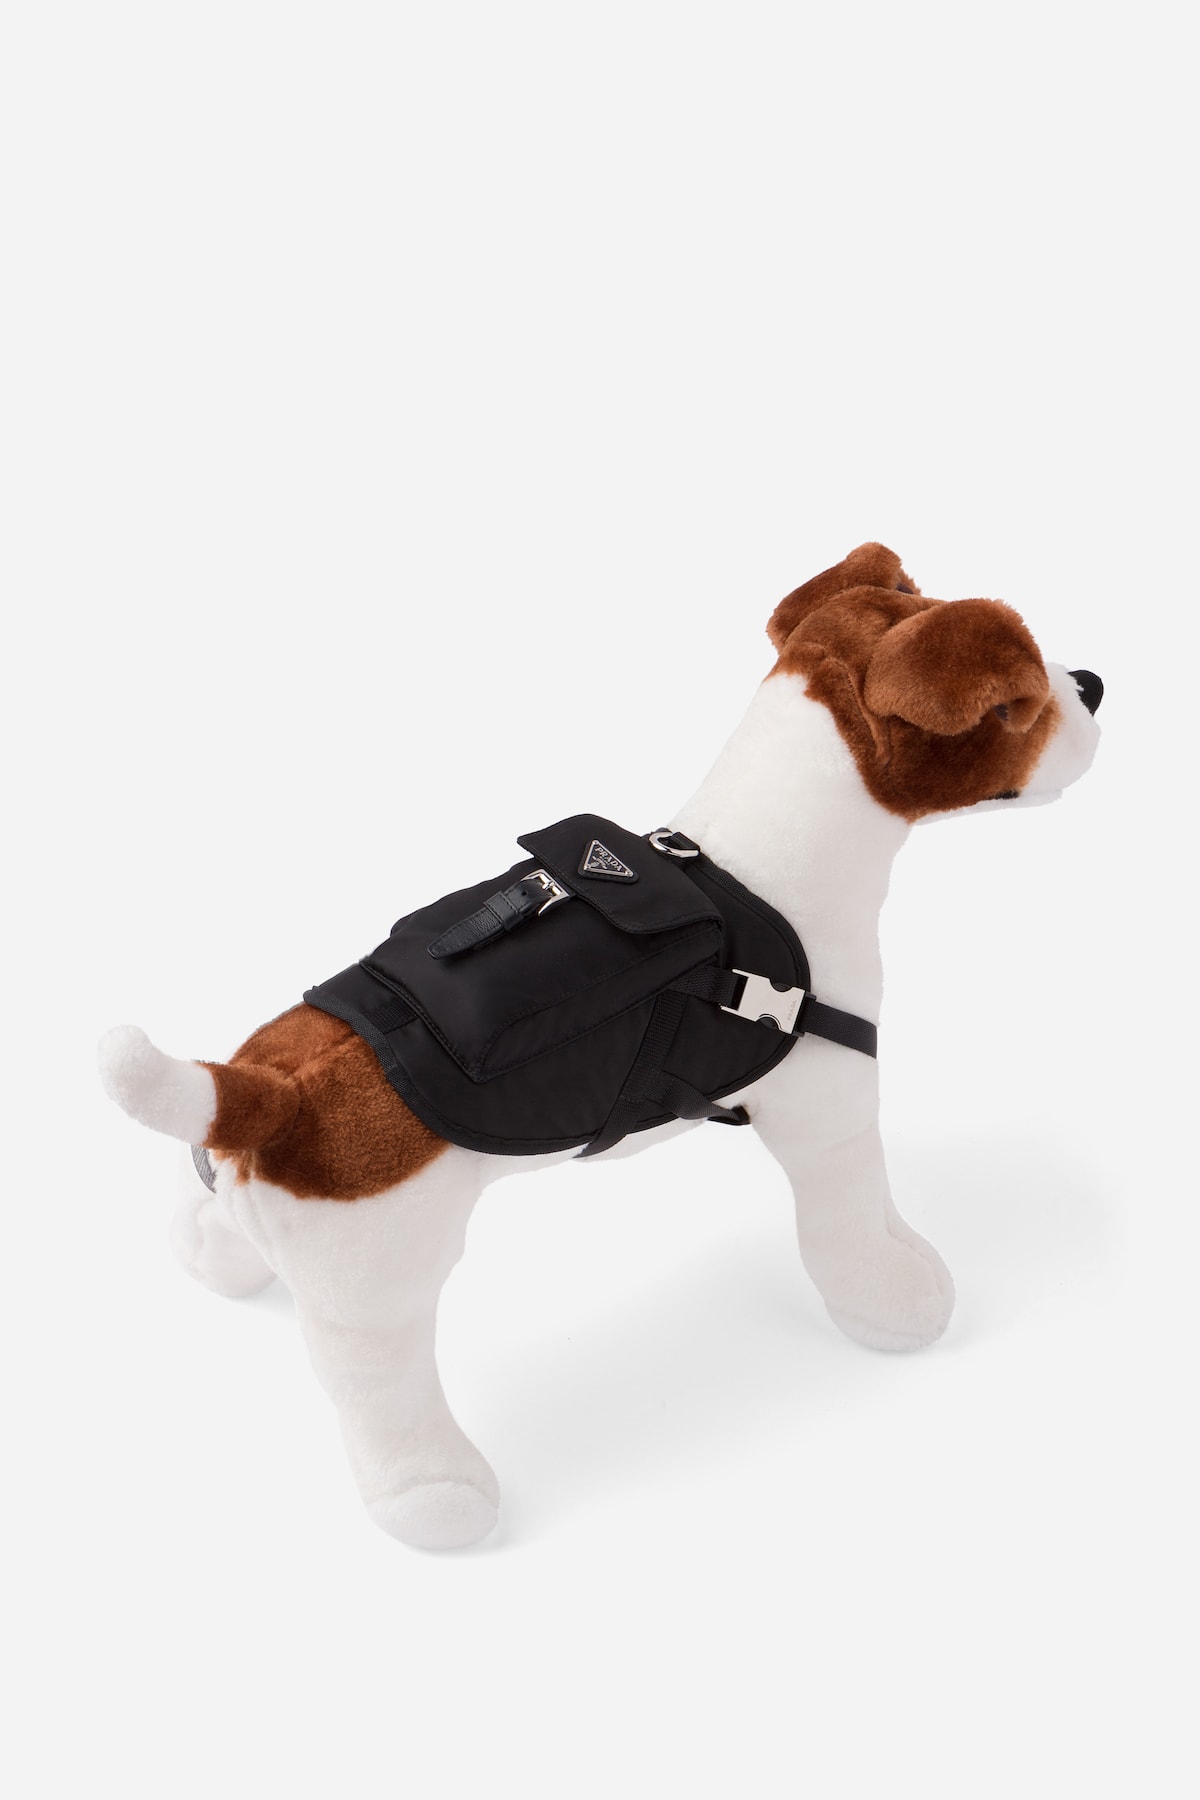 Prada Logo Dog Coats & Jackets Holiday 2020 Collection Pet Apparel Vest Puffer 